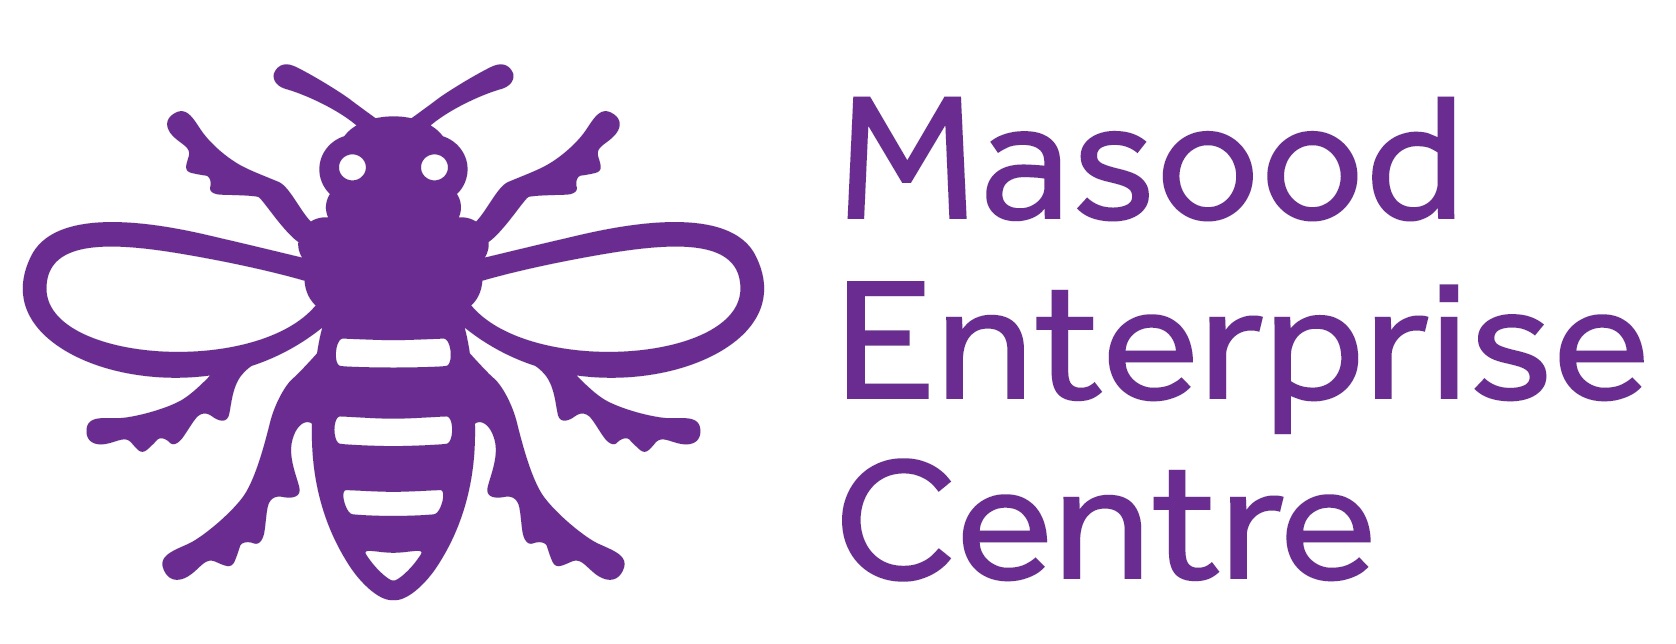 masood-enterprise-centre-logo